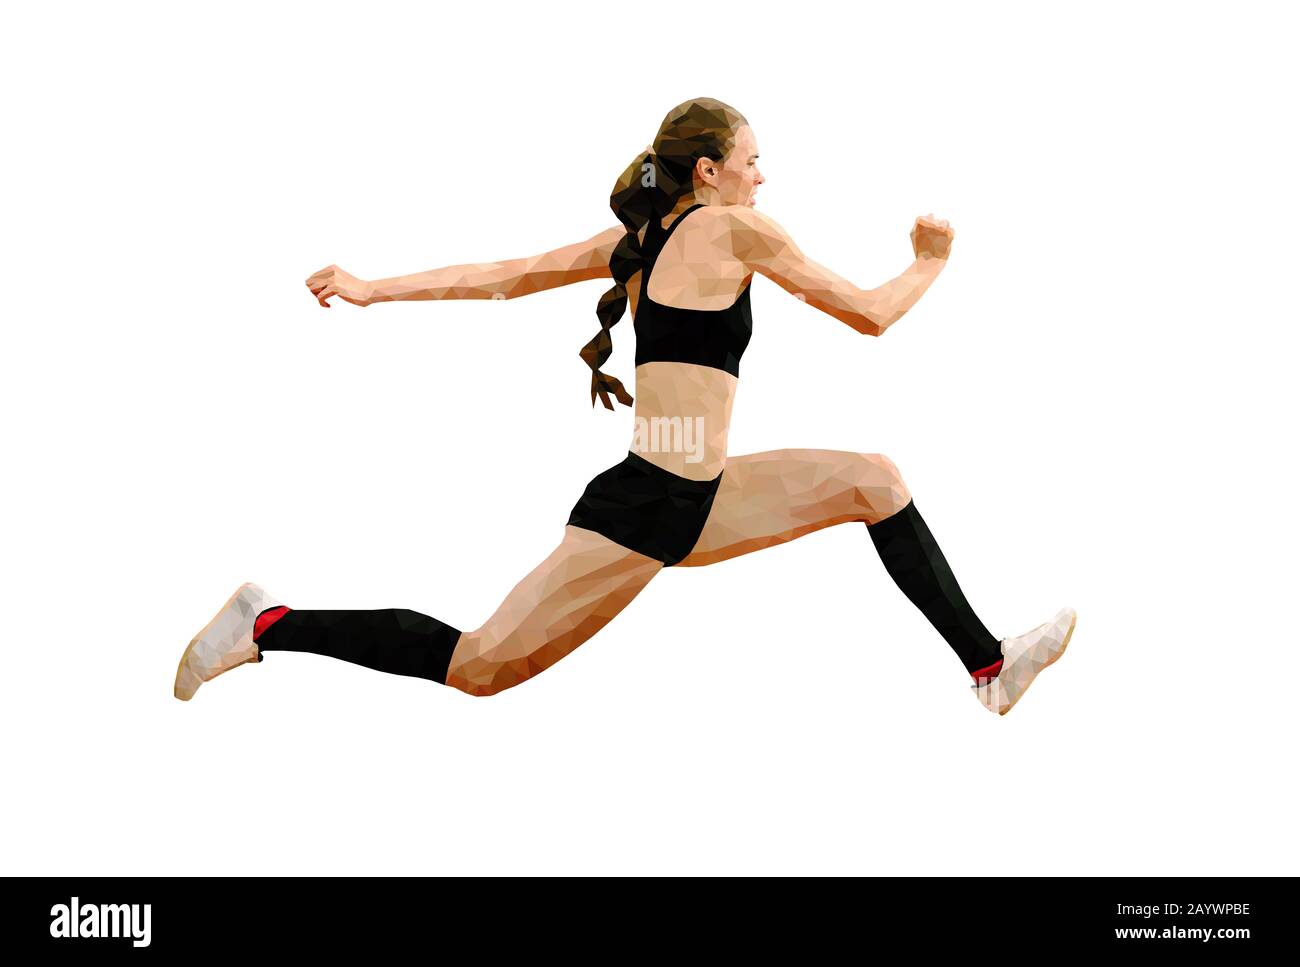 woman athlete jumping triple jump polygon vector Stock Photo